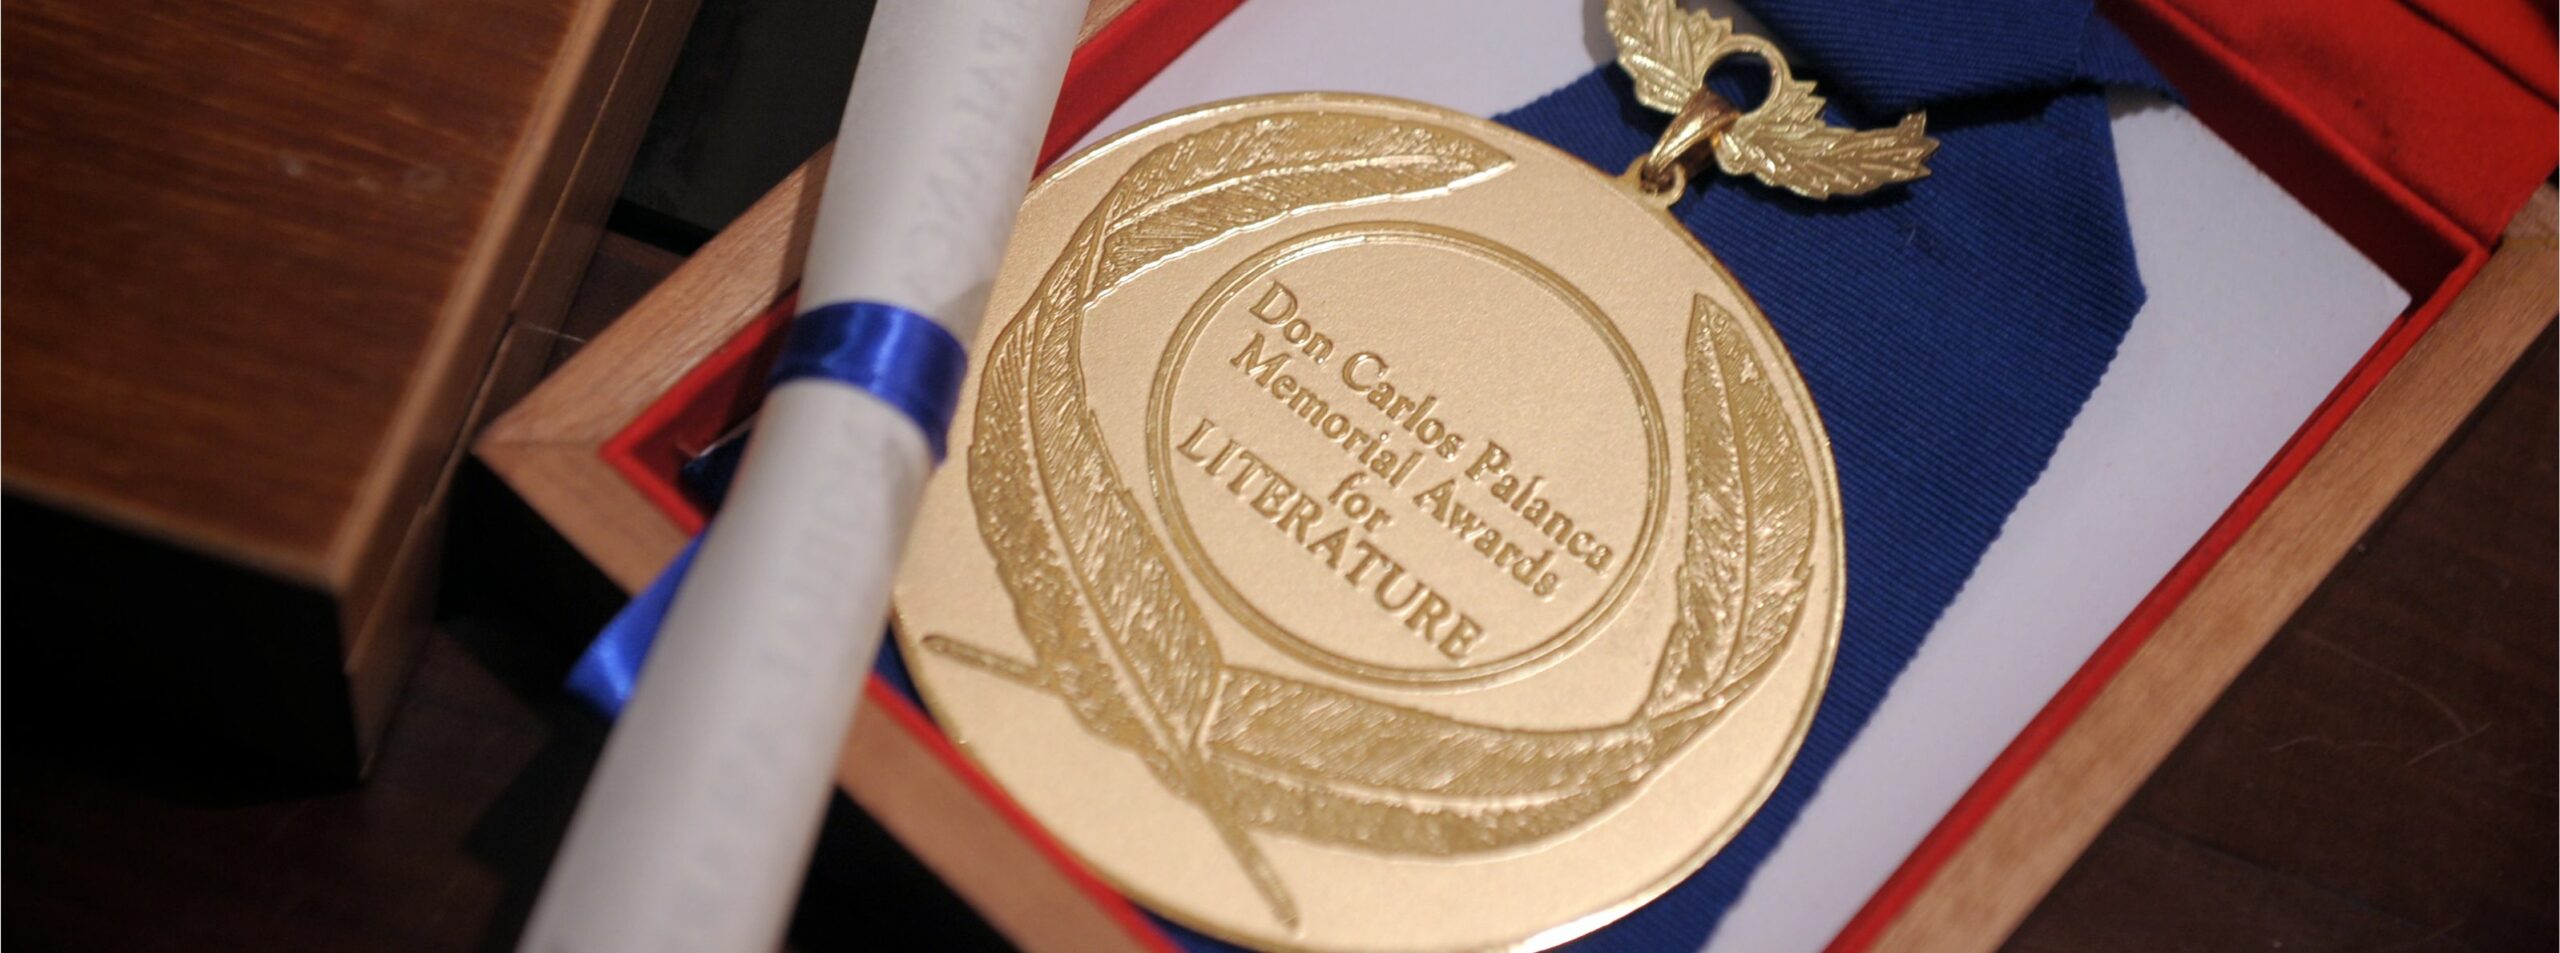 Carlos Palanca Memorial Awards Writers - medal